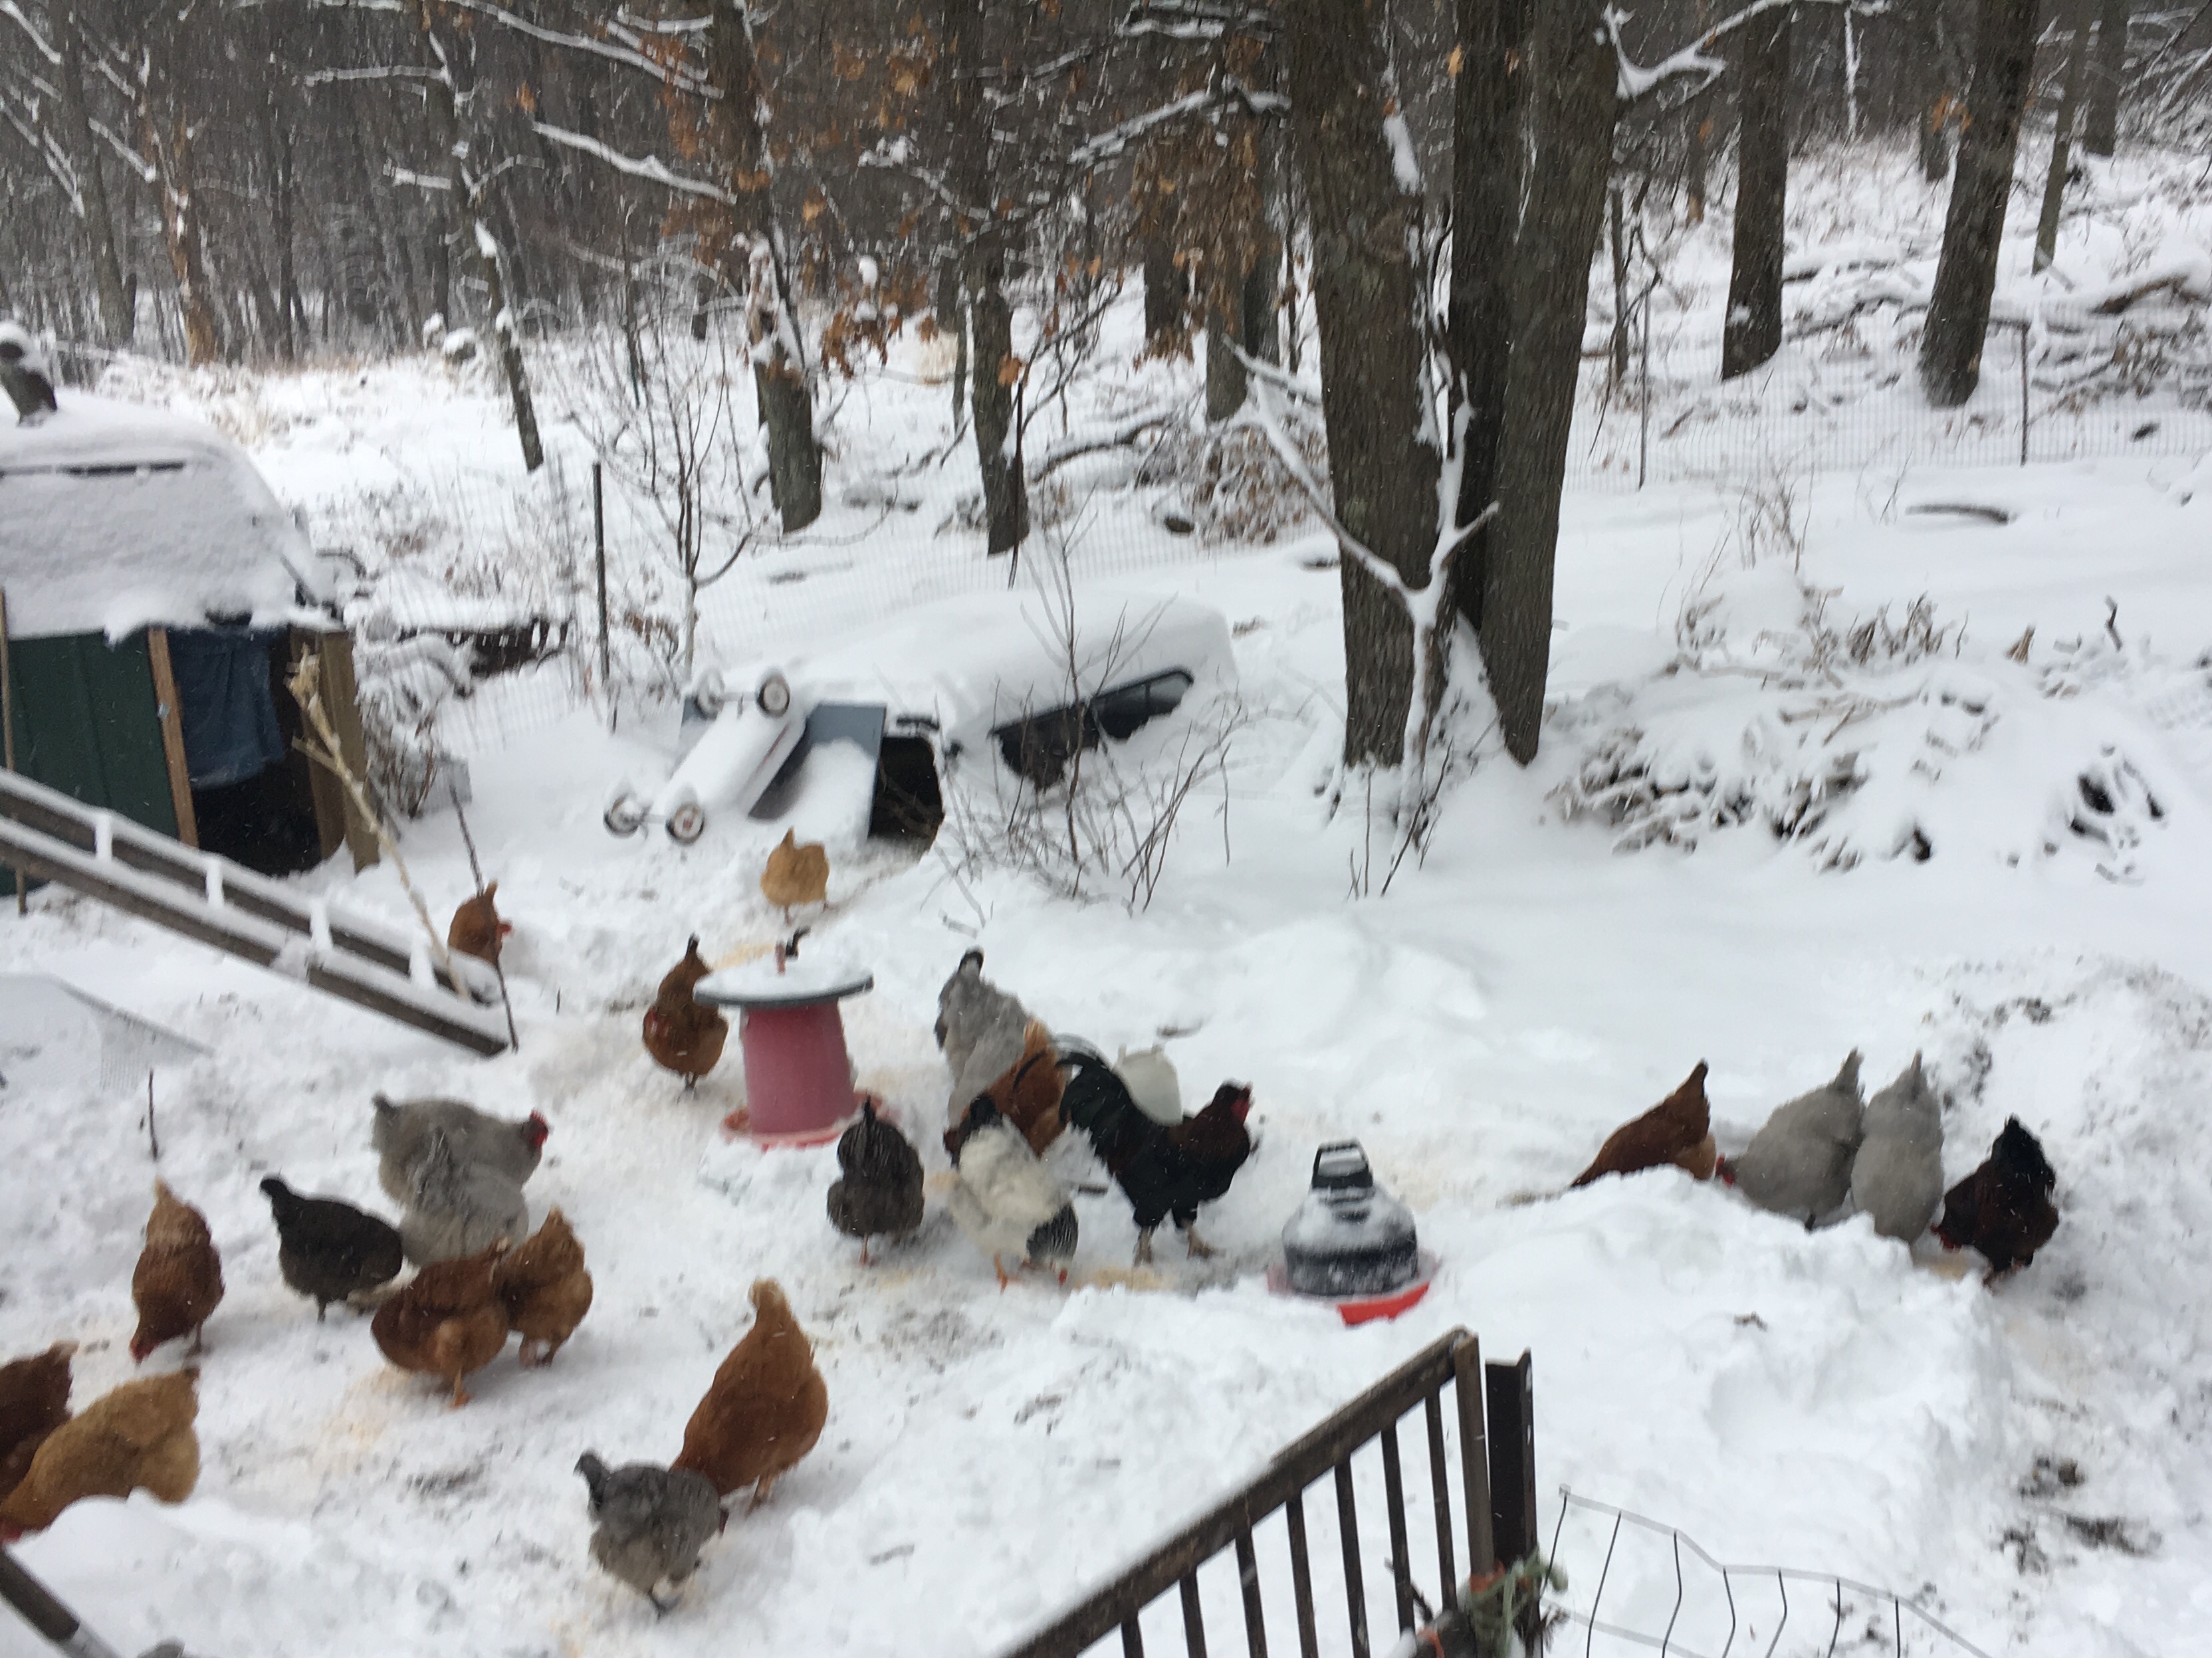 snowy chicken yard on April 15th